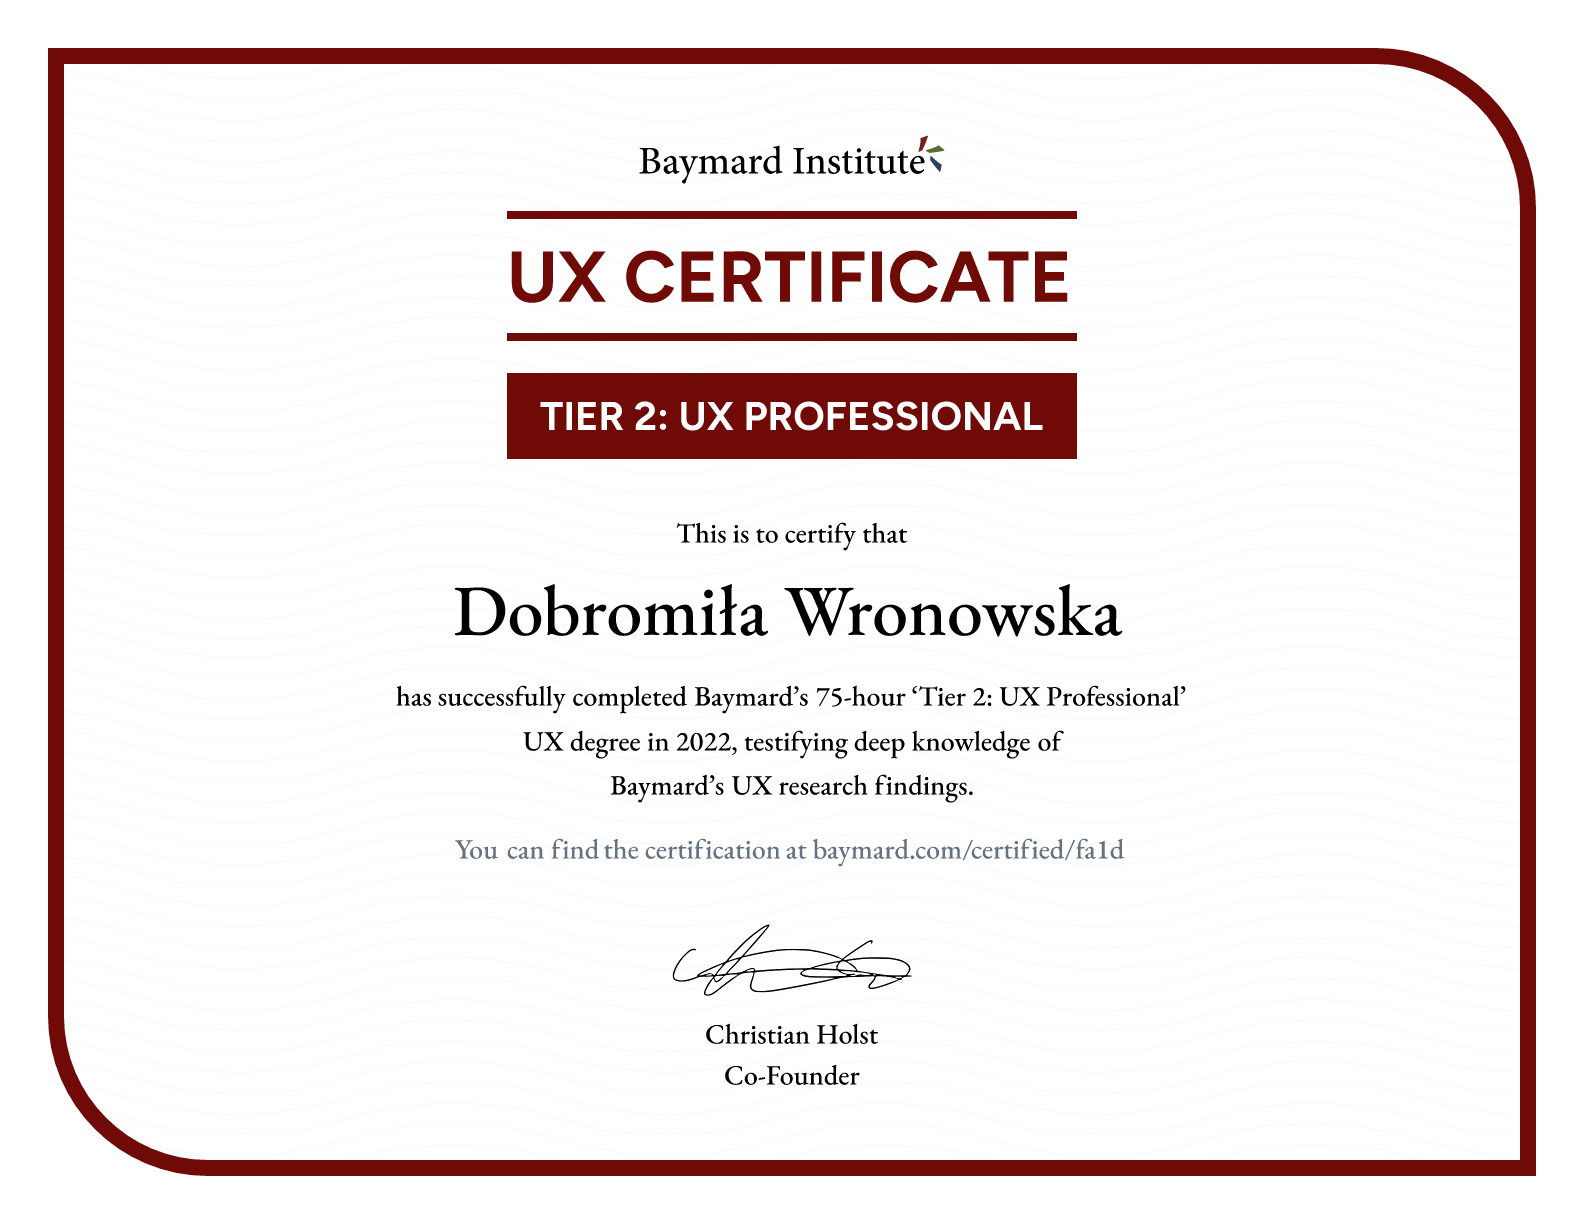 Dobromiła Wronowska’s certificate